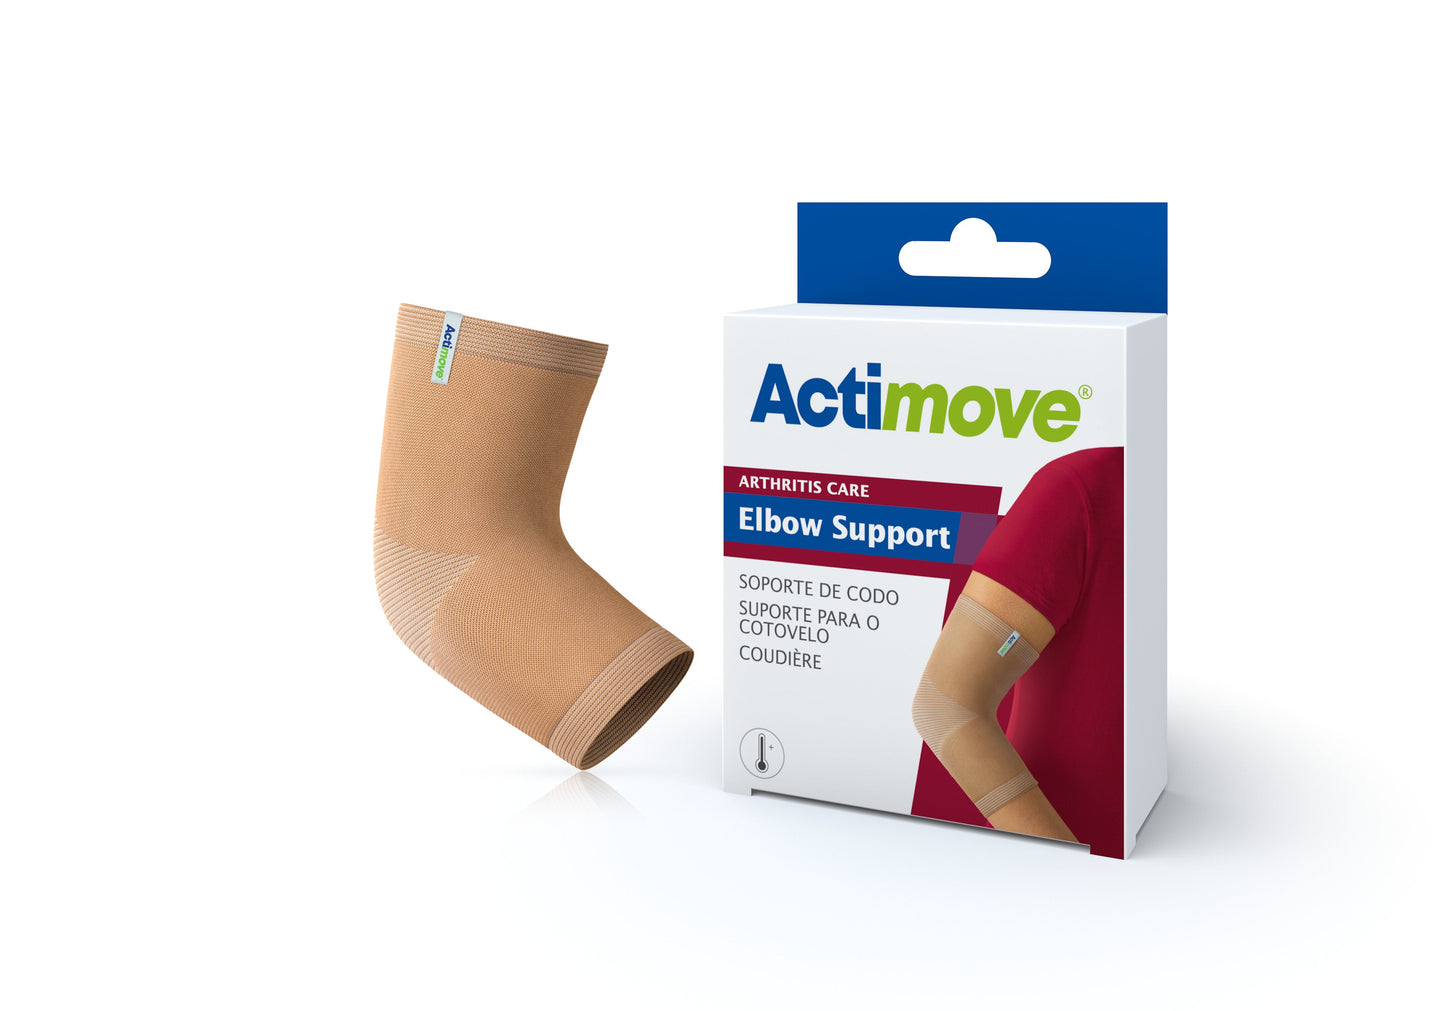 Jobst Actimove Arthritis Care Elbow Support